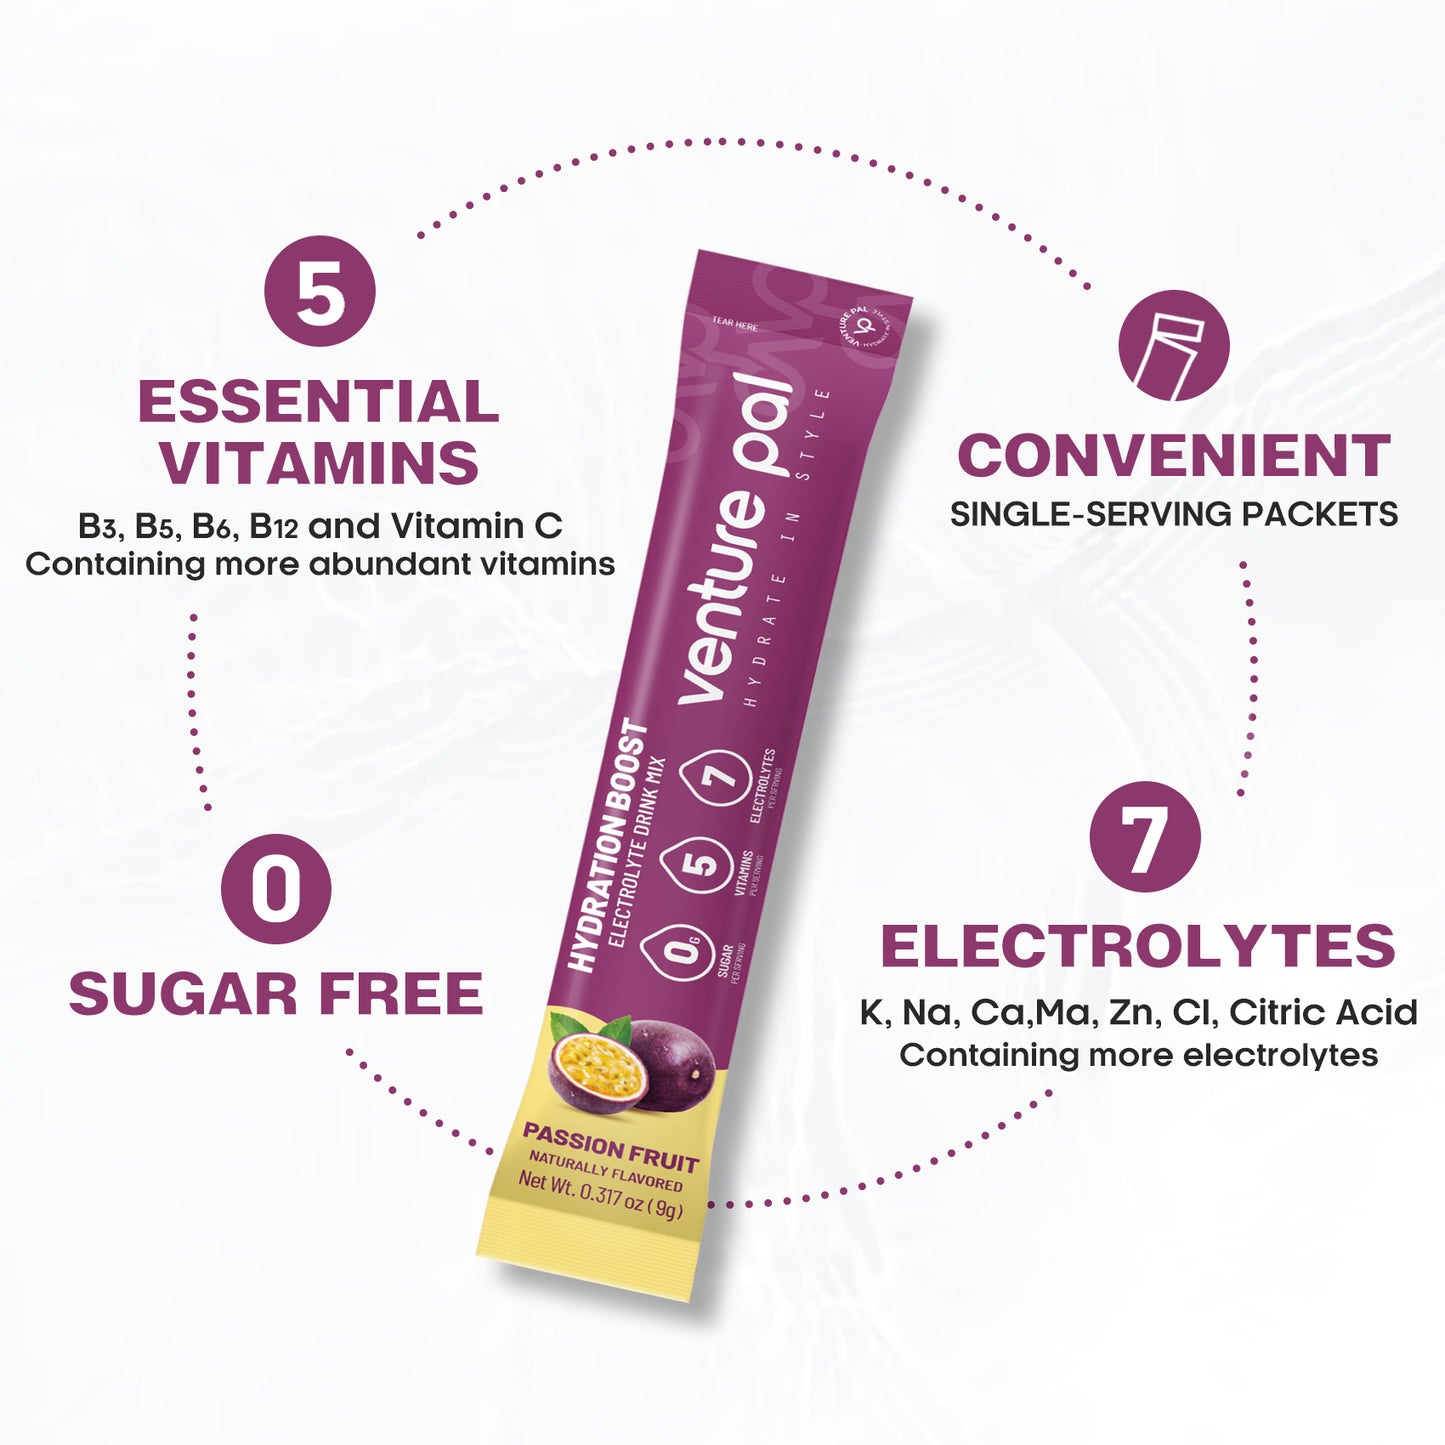 Venture Pal Sugar Free Electrolyte Powder Packets - Passion Fruit Flavor - 16 Sticks